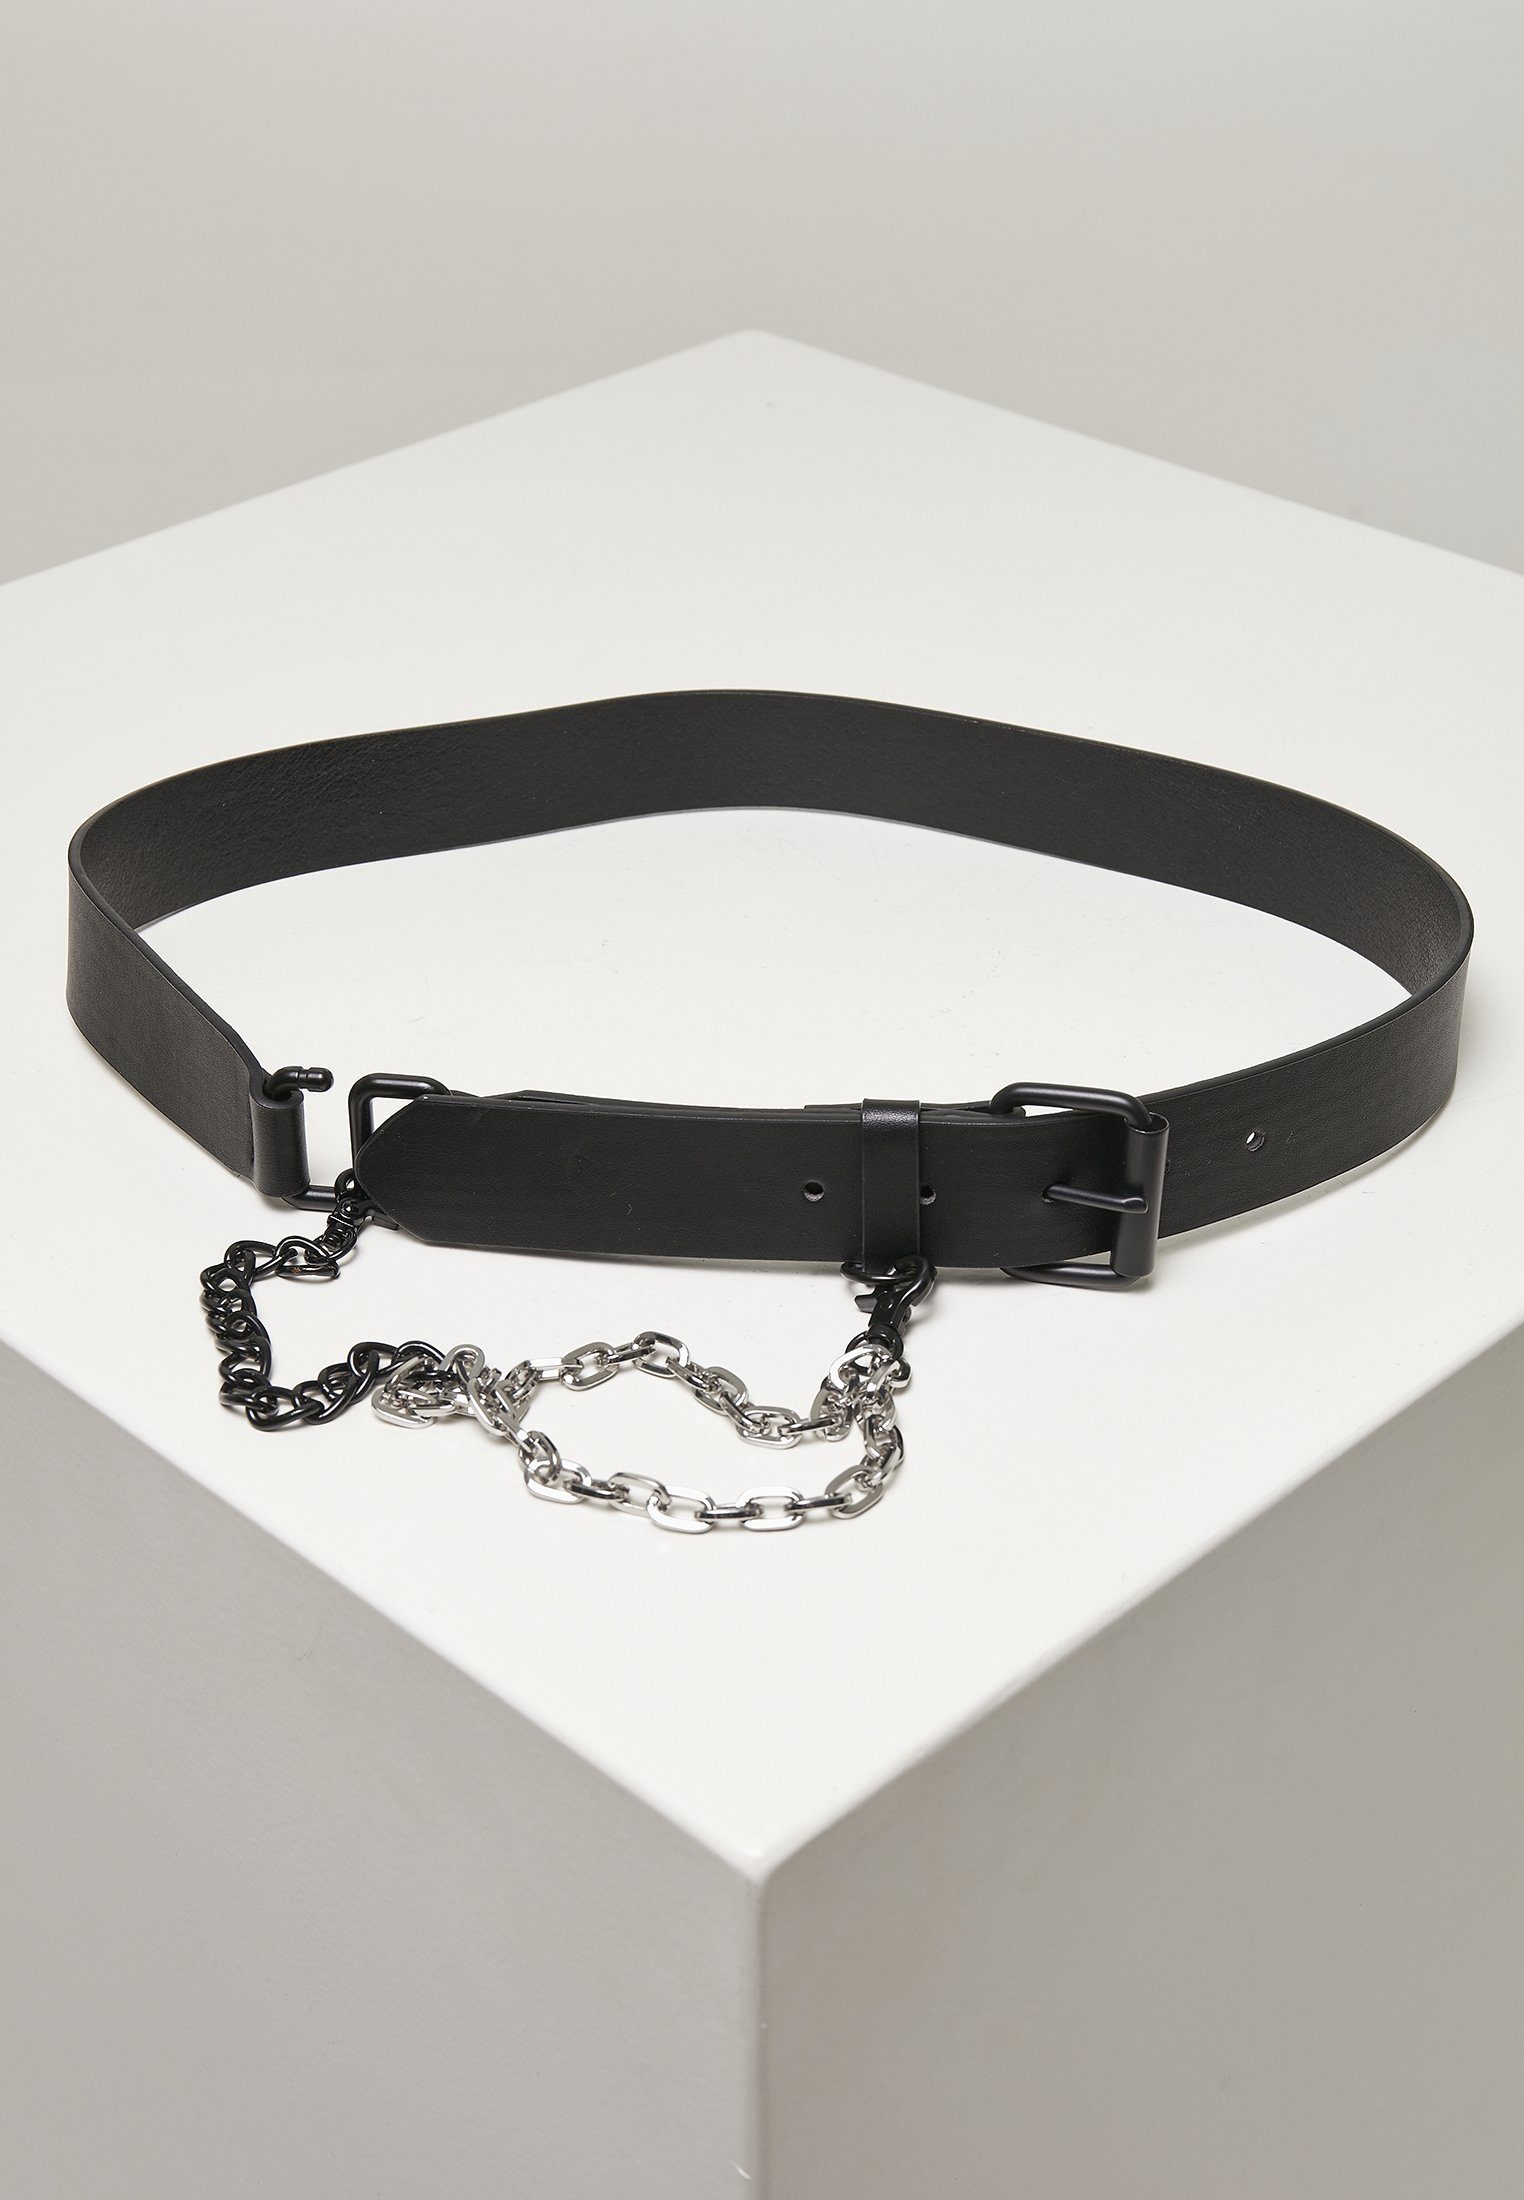 Metal Hüftgürtel CLASSICS Imitation With Belt URBAN Leather Chain Accessories